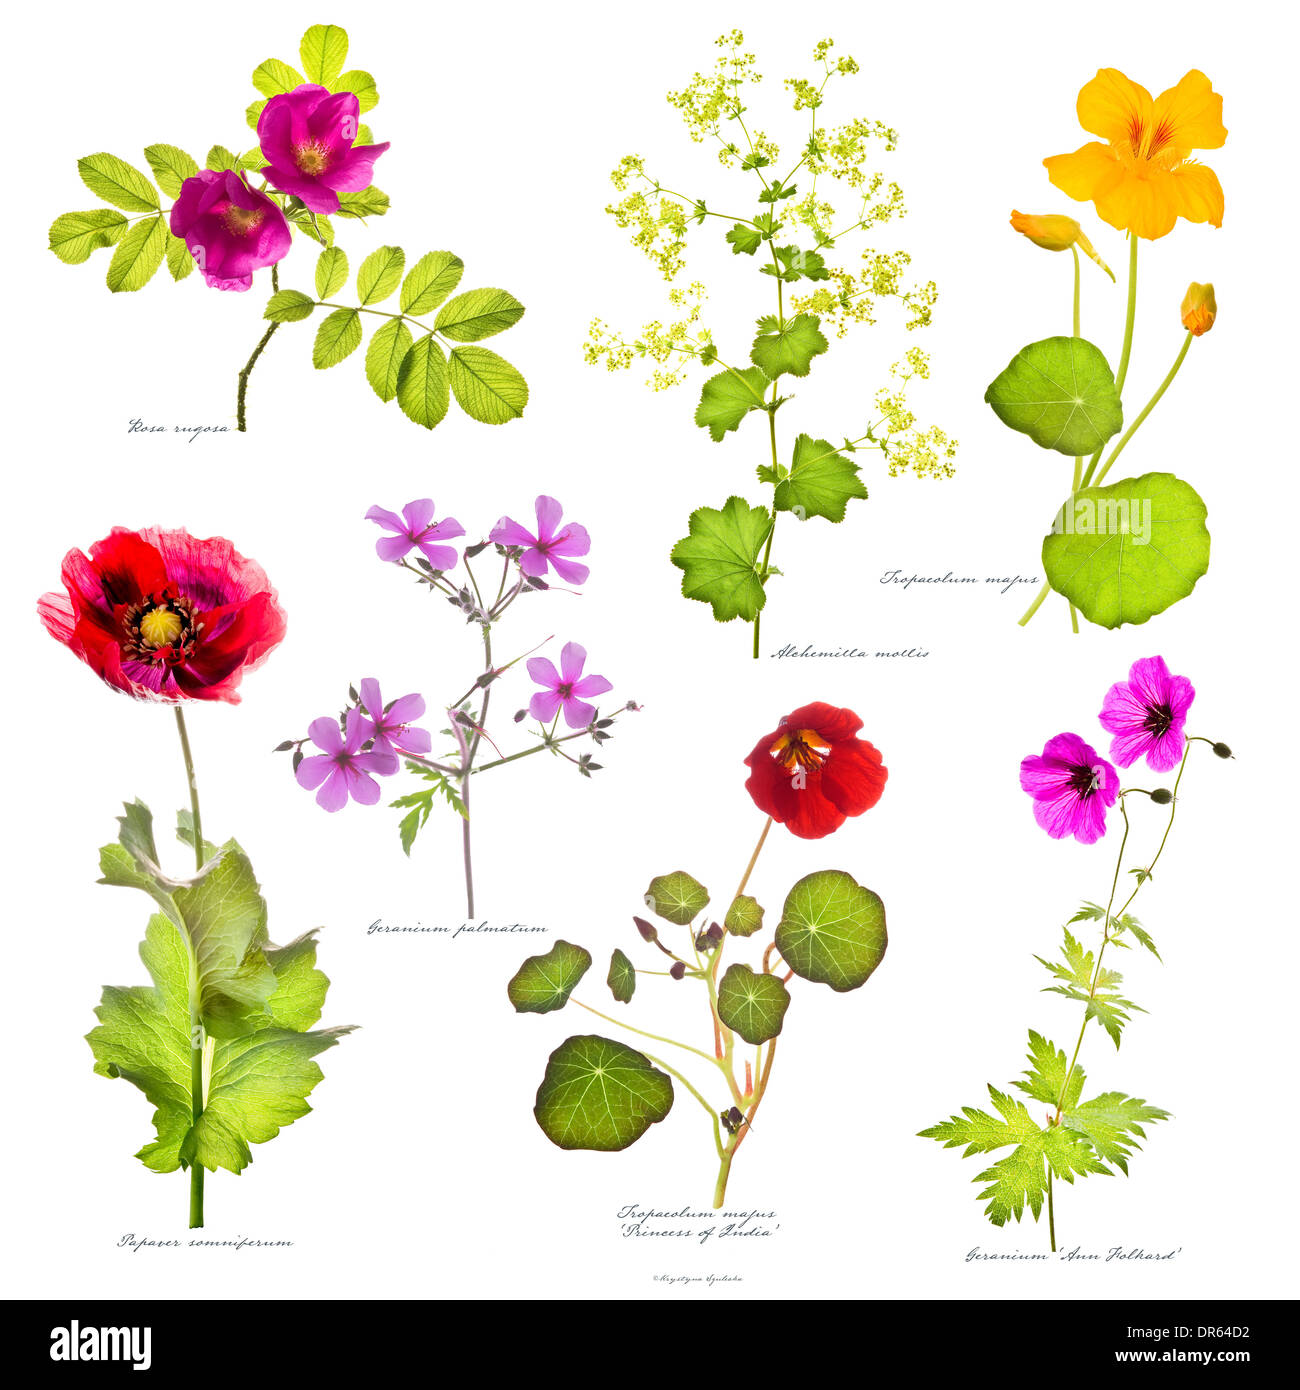 Rosa rugosa, Alchemilla mollis, Papaver somniferum, Geranium palmatum & G. ‘Ann Folkand, Tropaeolum majus ‘Princess of India’ Stock Photo